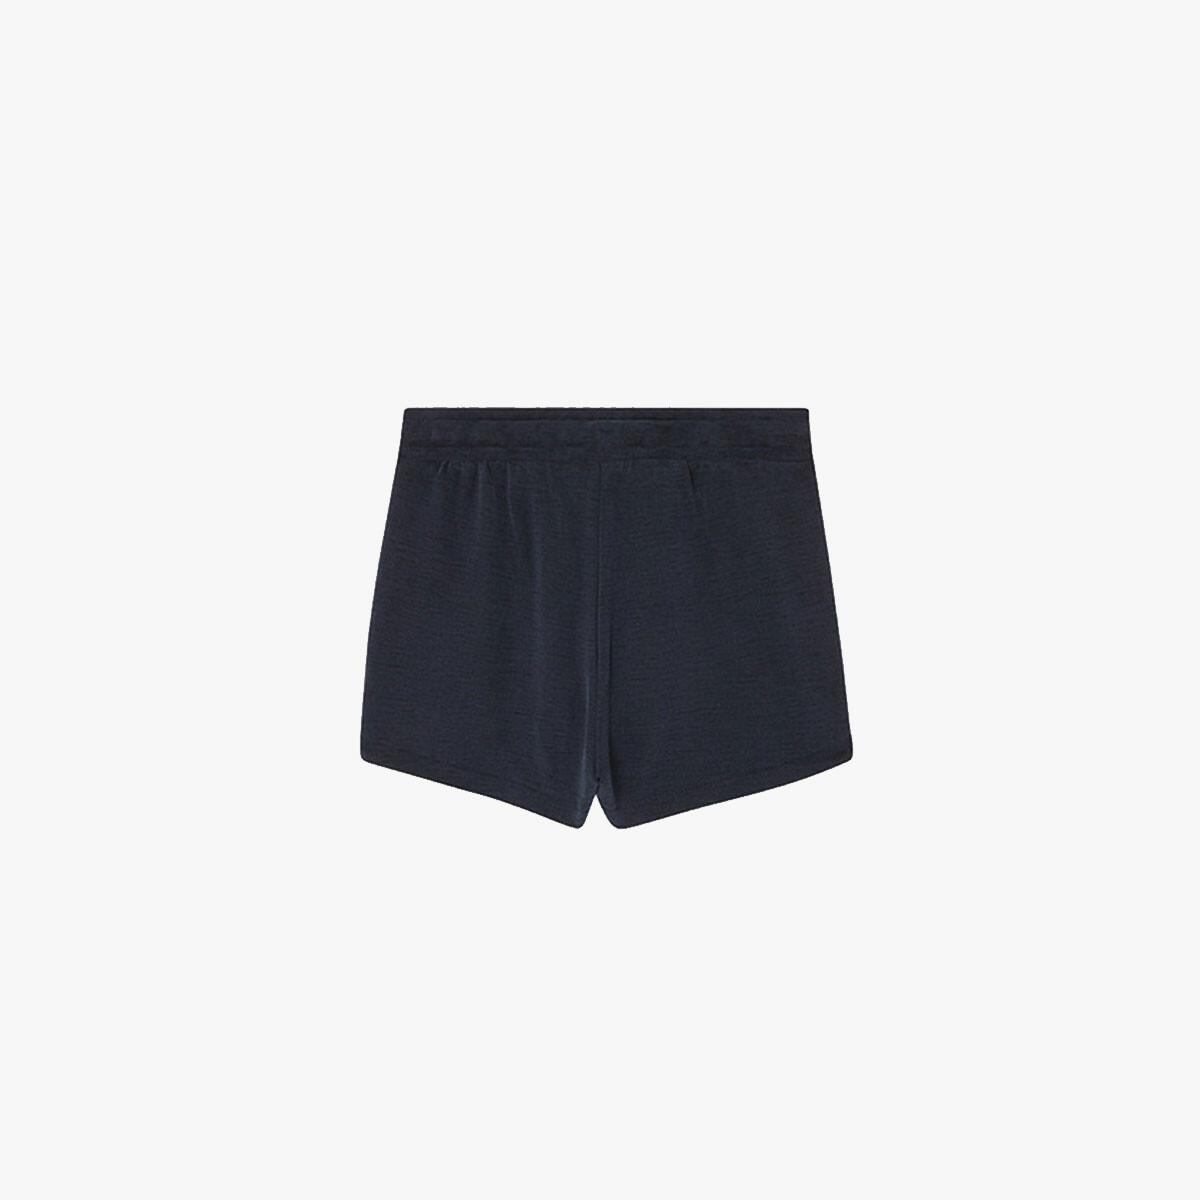 Short Wells, Navy - Short shorts with drawstring - Cupro / Cotton - image 2